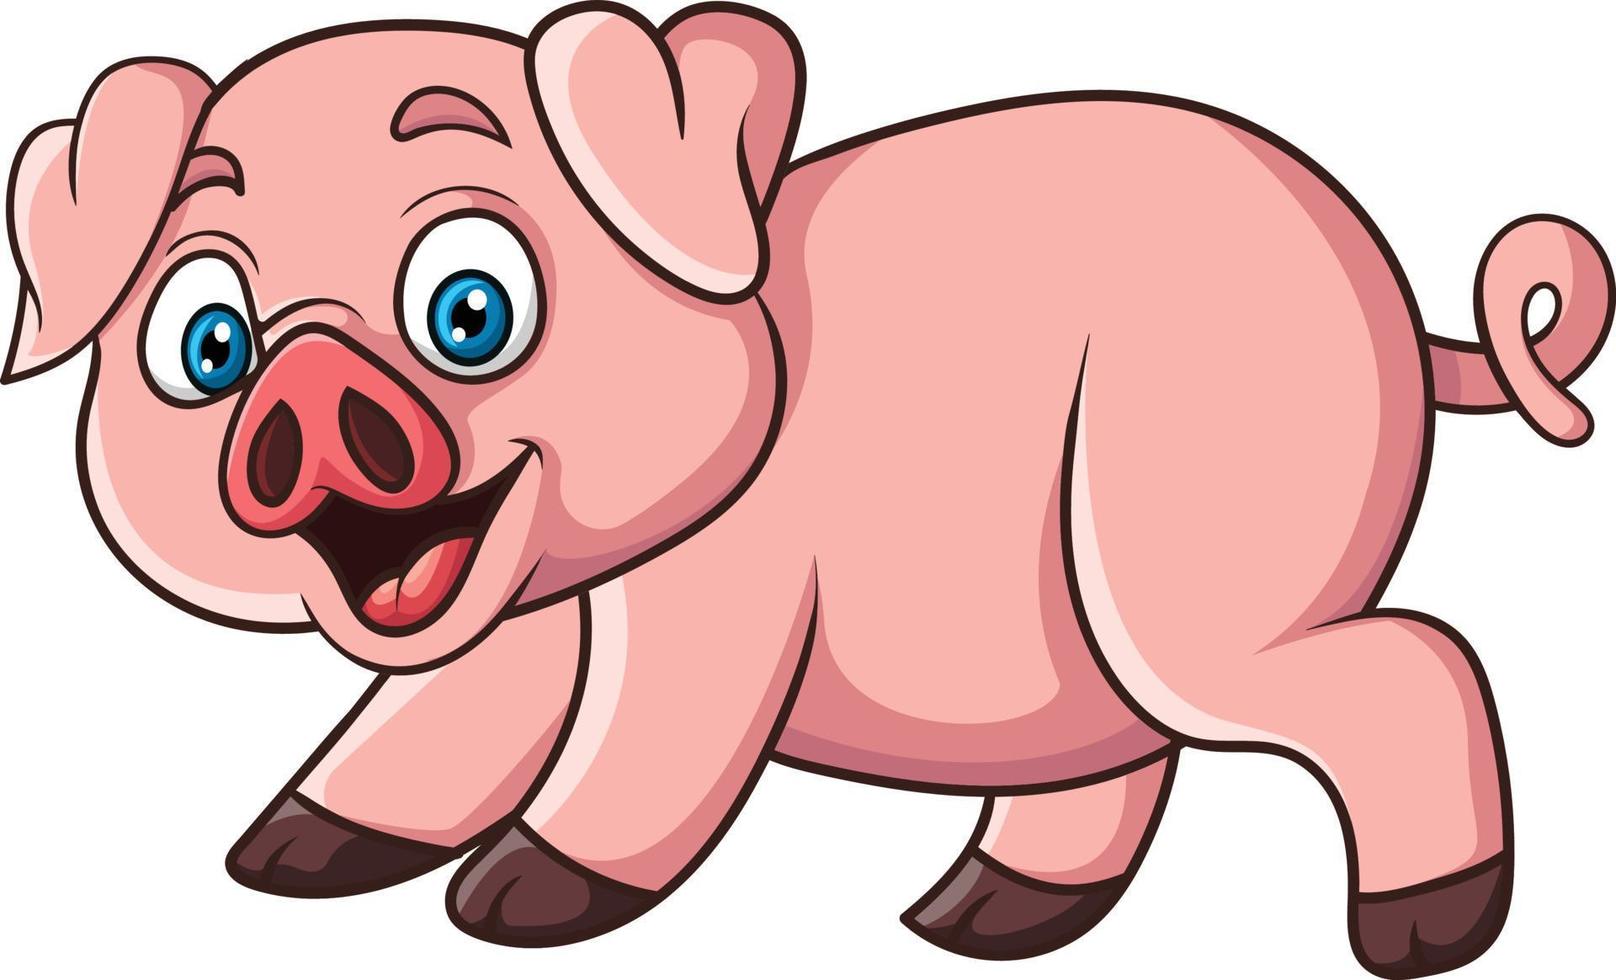 cerdo divertido de dibujos animados sobre fondo blanco vector